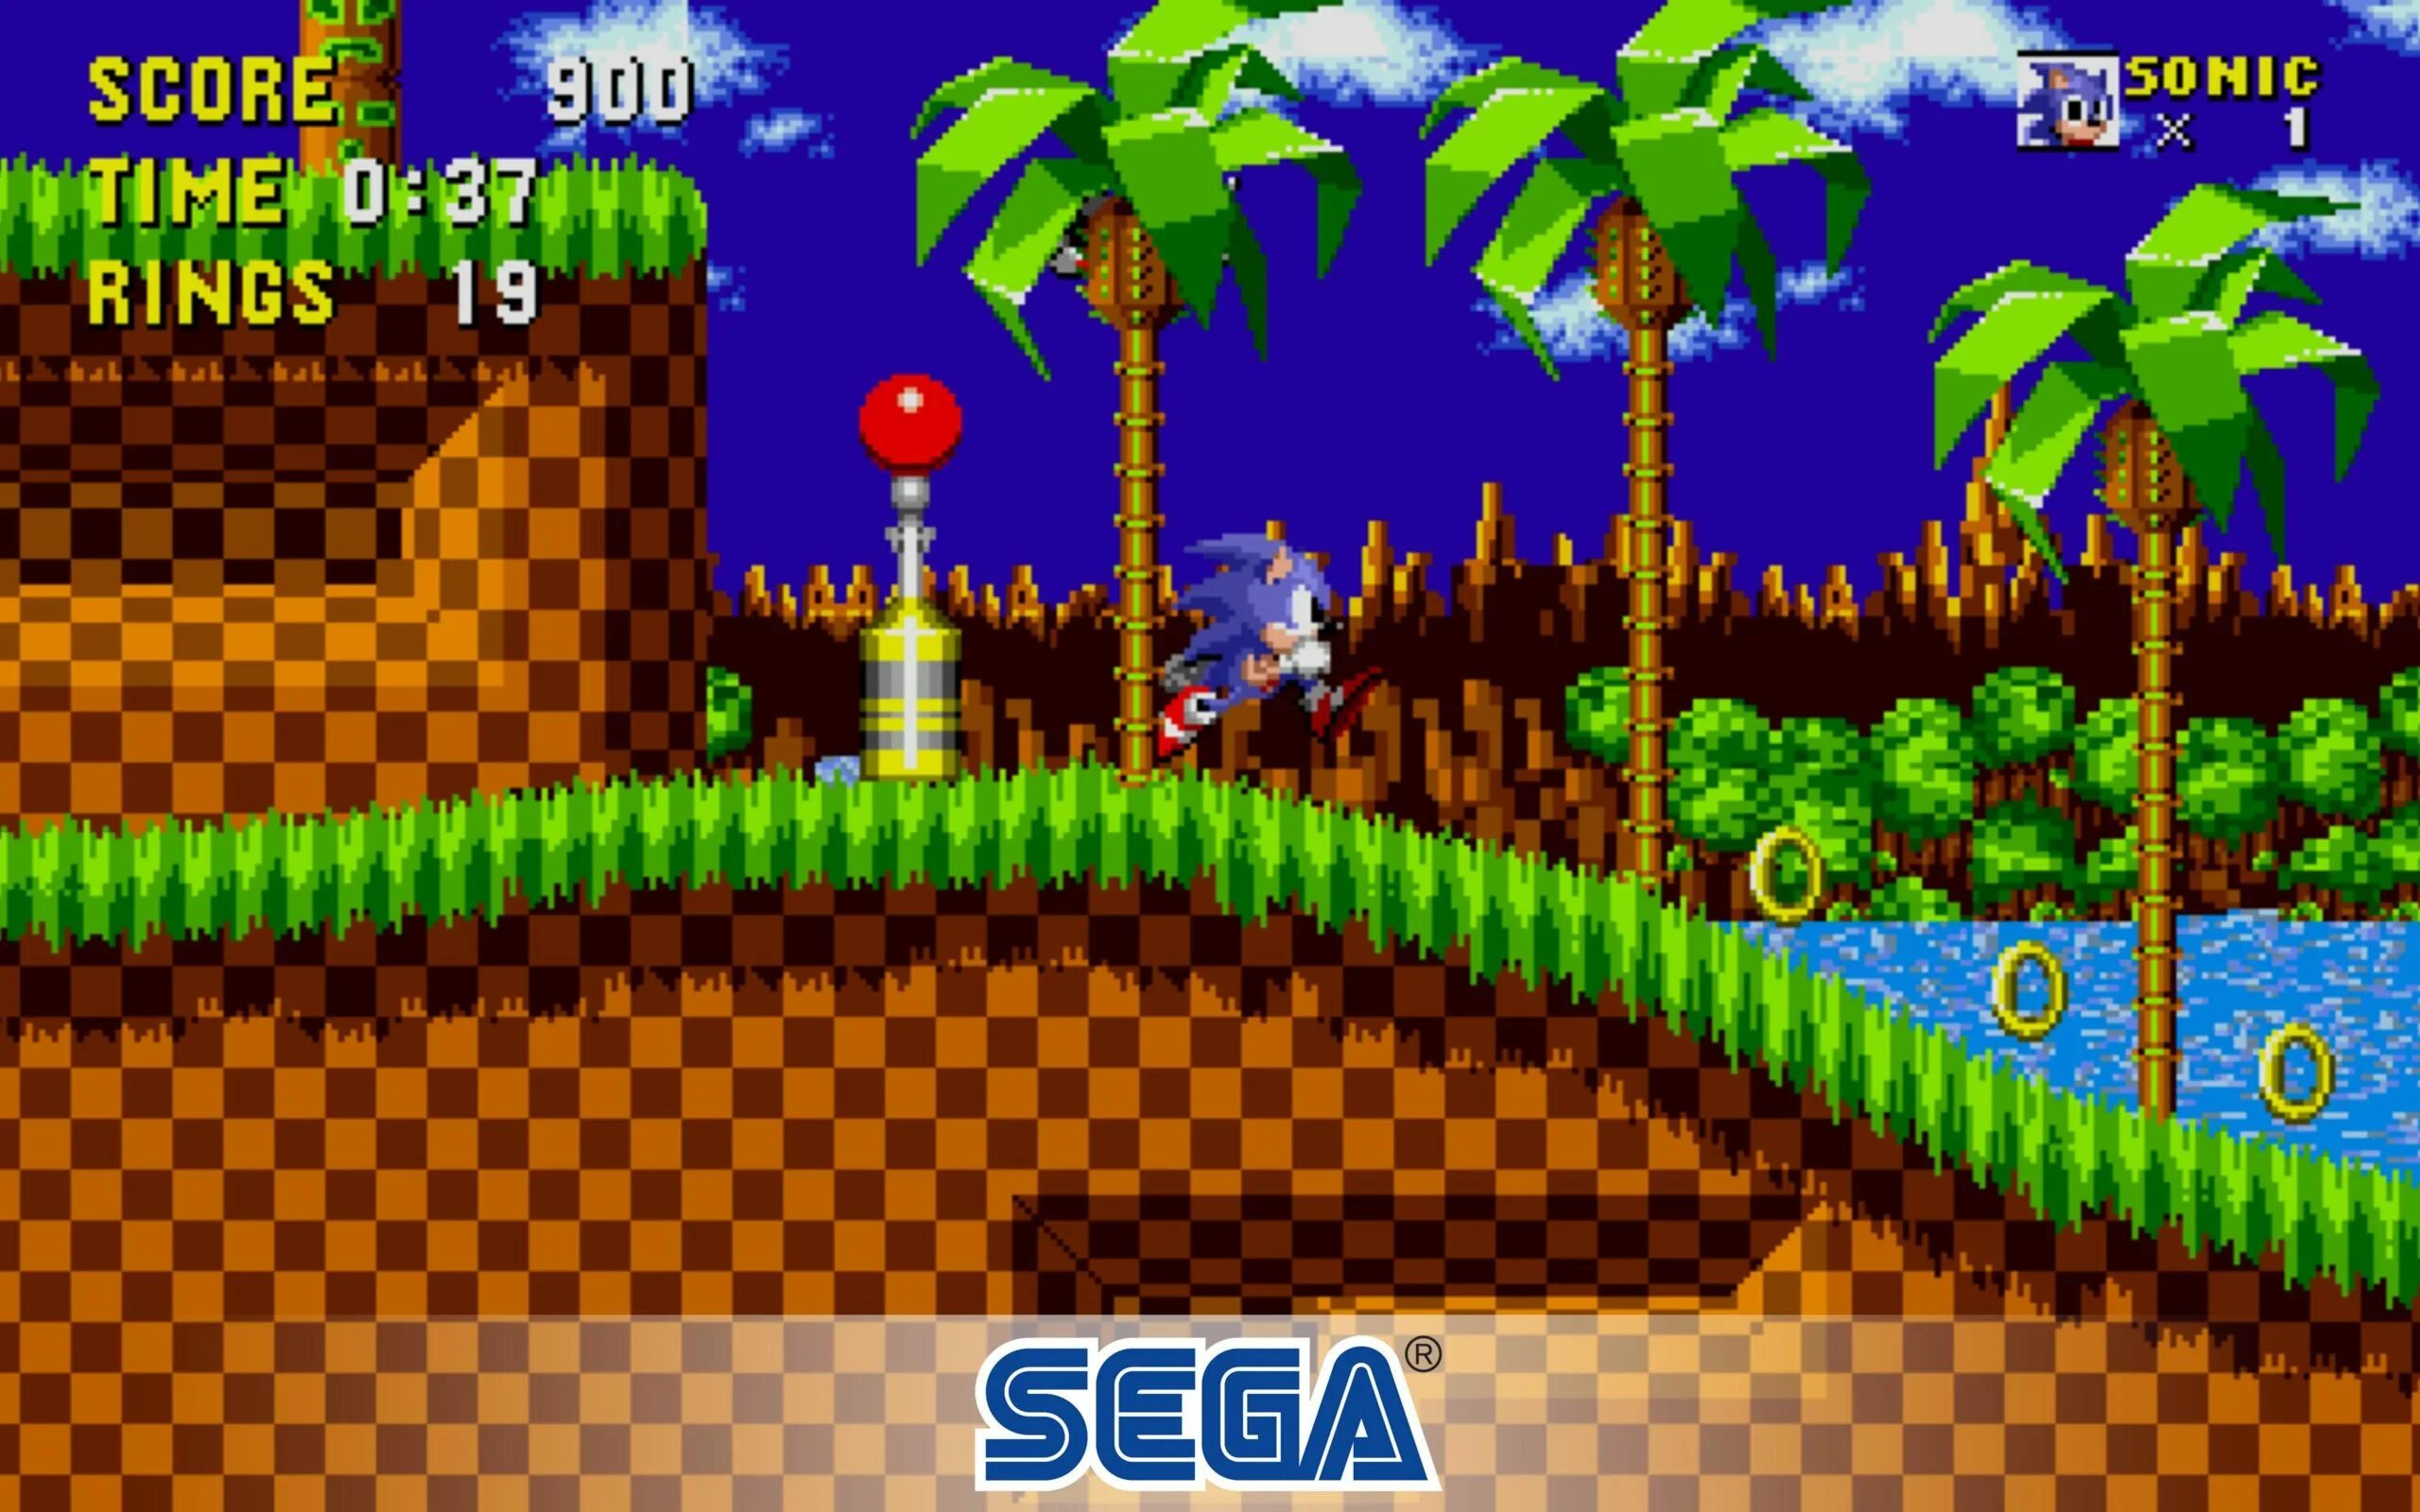 Sonic 1 Sega. Соник игра 1991. Соник игра сега. Игра Sonic the Hedgehog 3. Оригинальный sonic